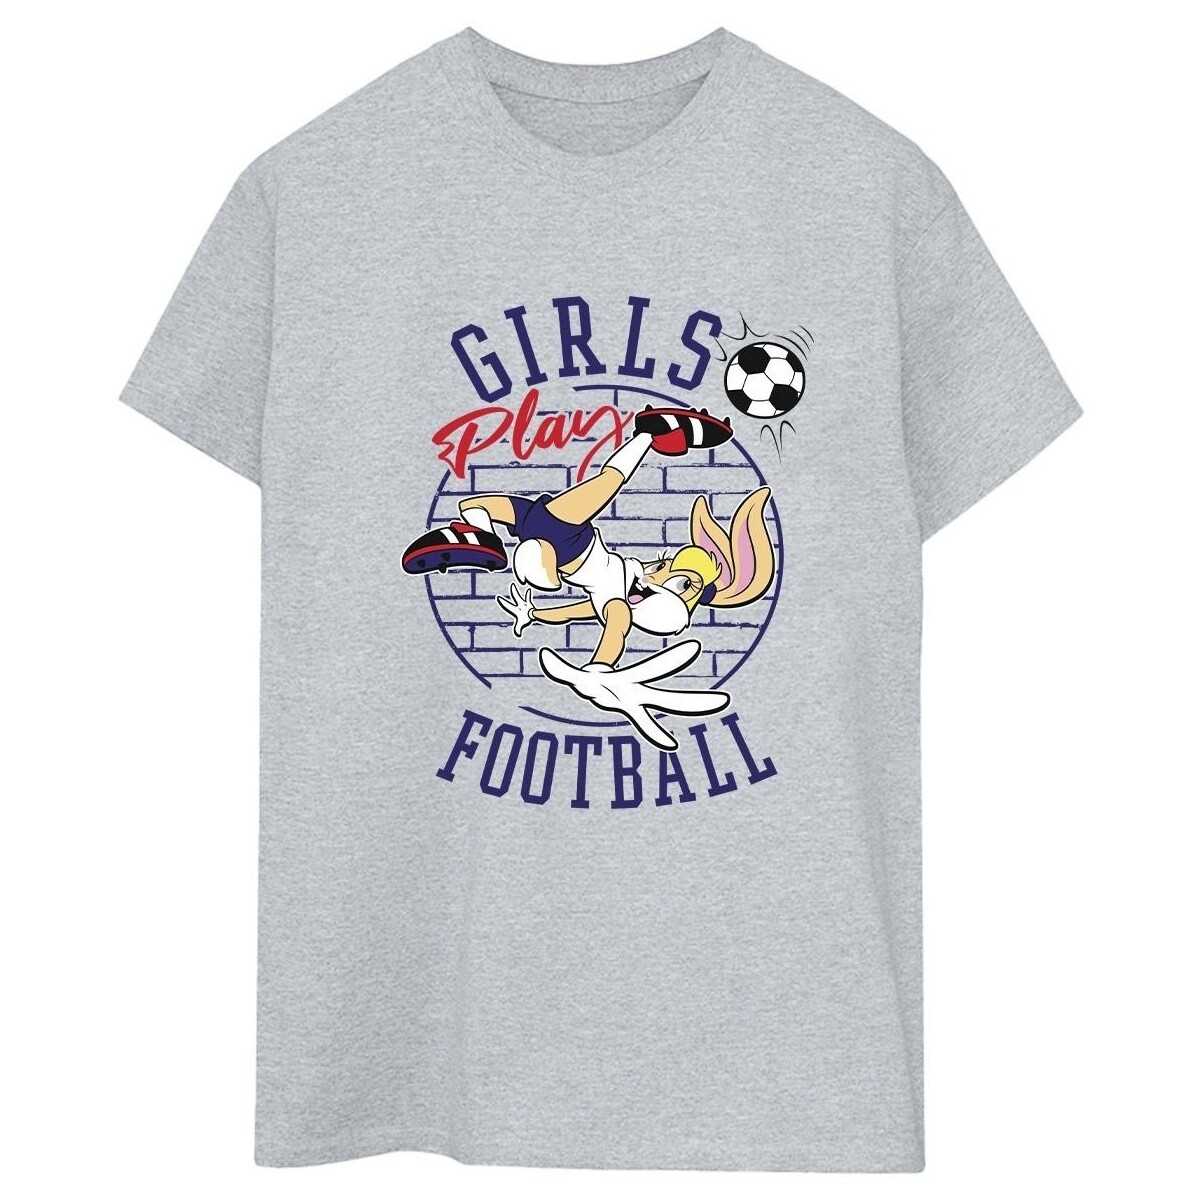 Vêtements Femme T-shirts manches longues Dessins Animés Lola Bunny Girls Play Football Gris